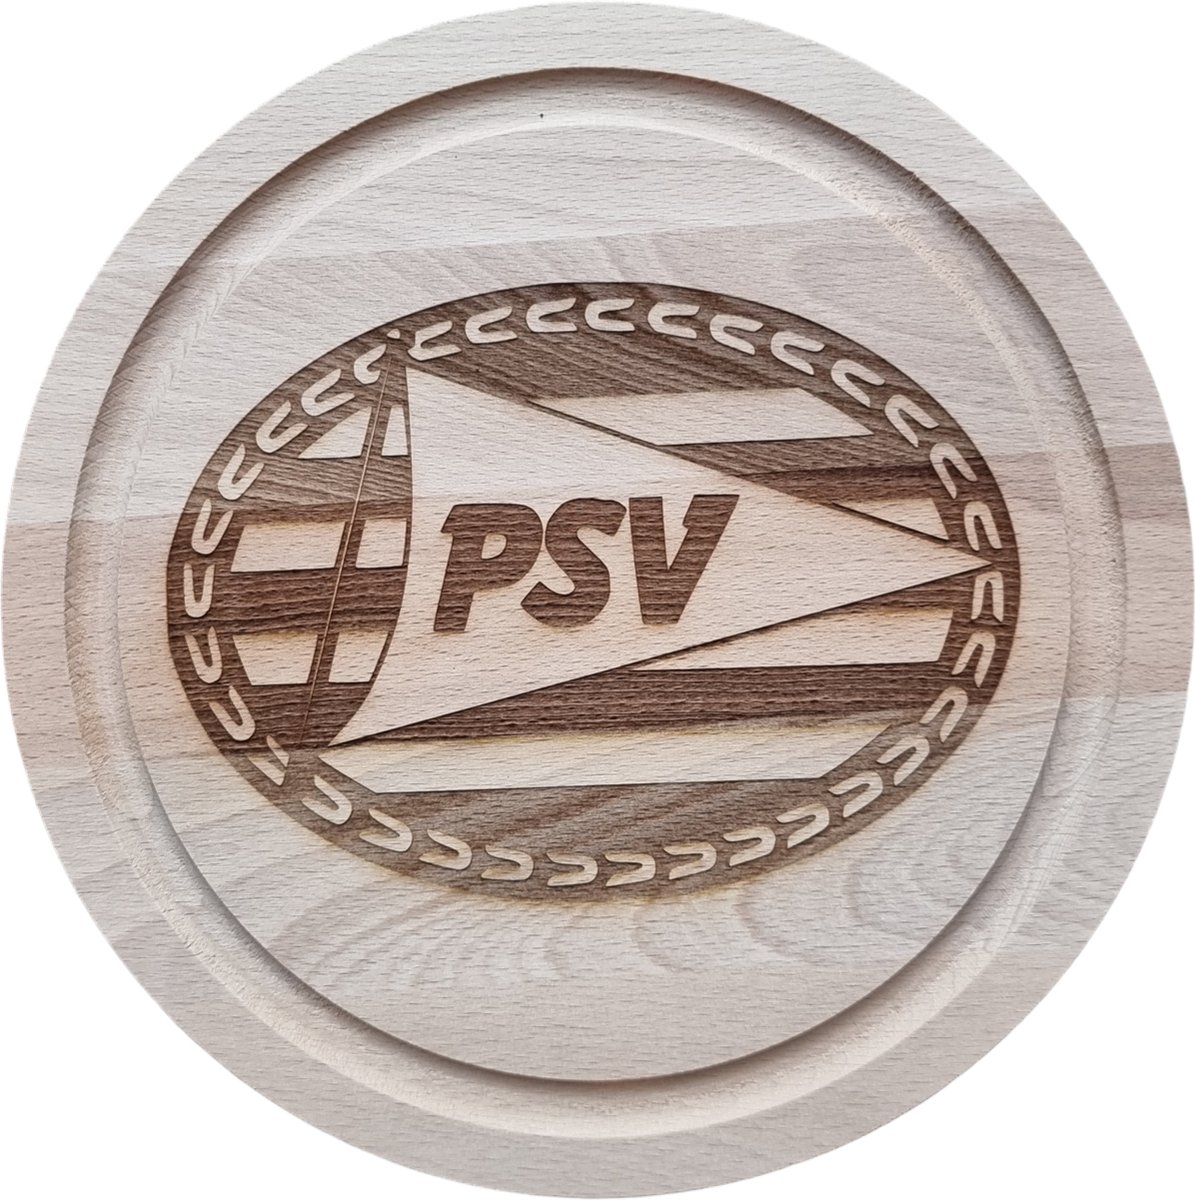 Borrelplank PSV Logo - Rond - Hout - Tapasplank - Snijplank - 24cm - Voetbal - Voetballen - Cadeau